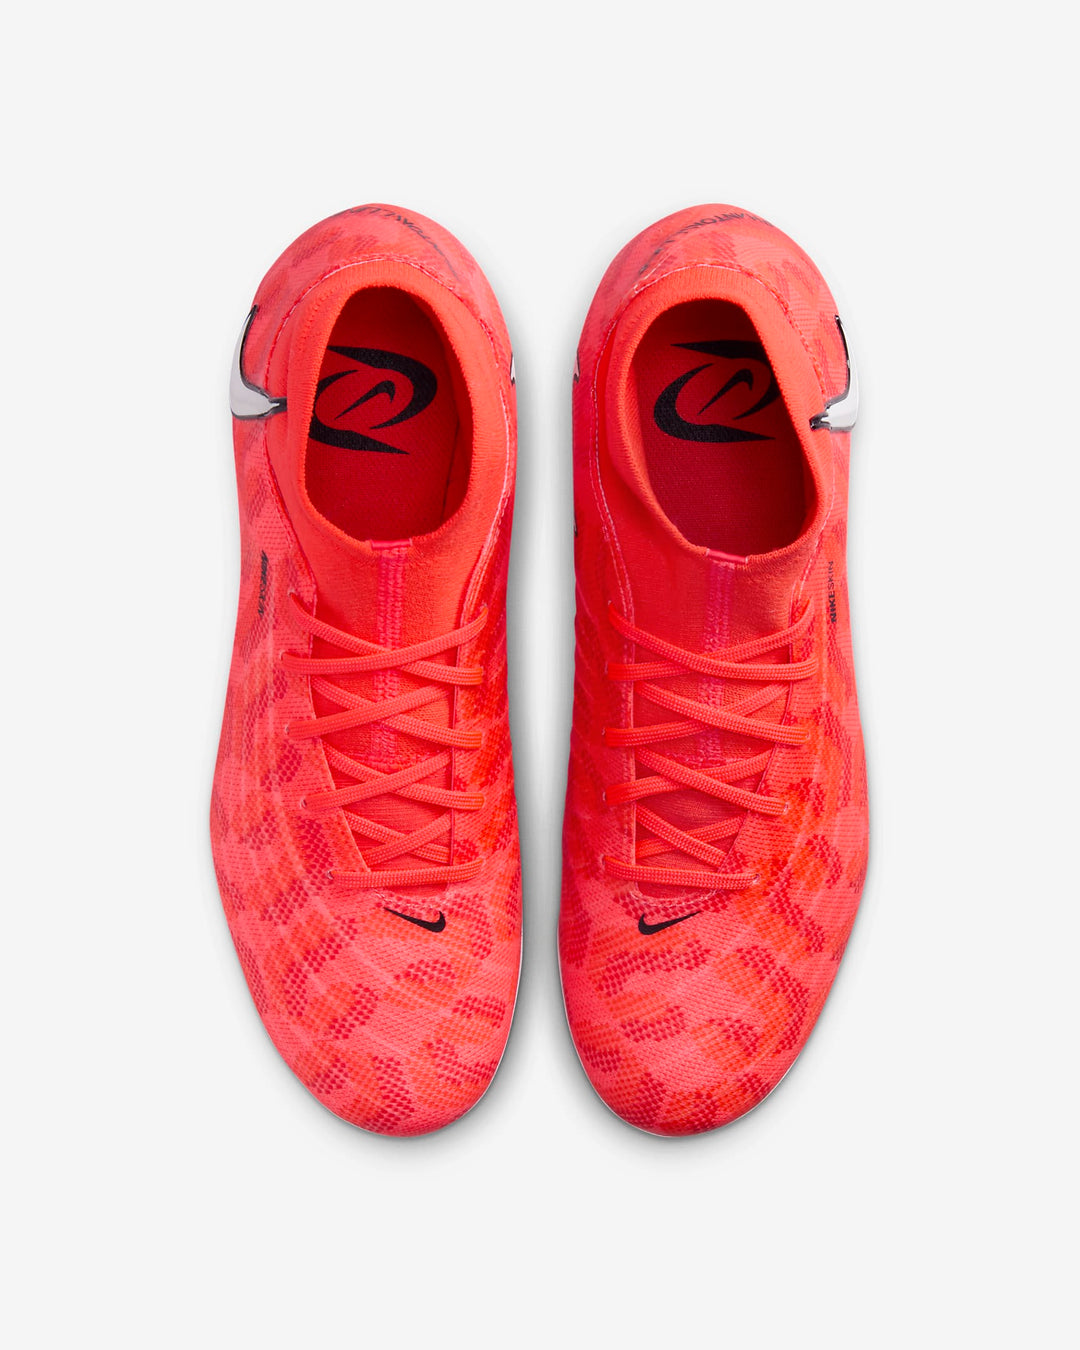 Giày Nike Phantom Luna FG Soccer Cleats #Bright Crimson - Kallos Vietnam